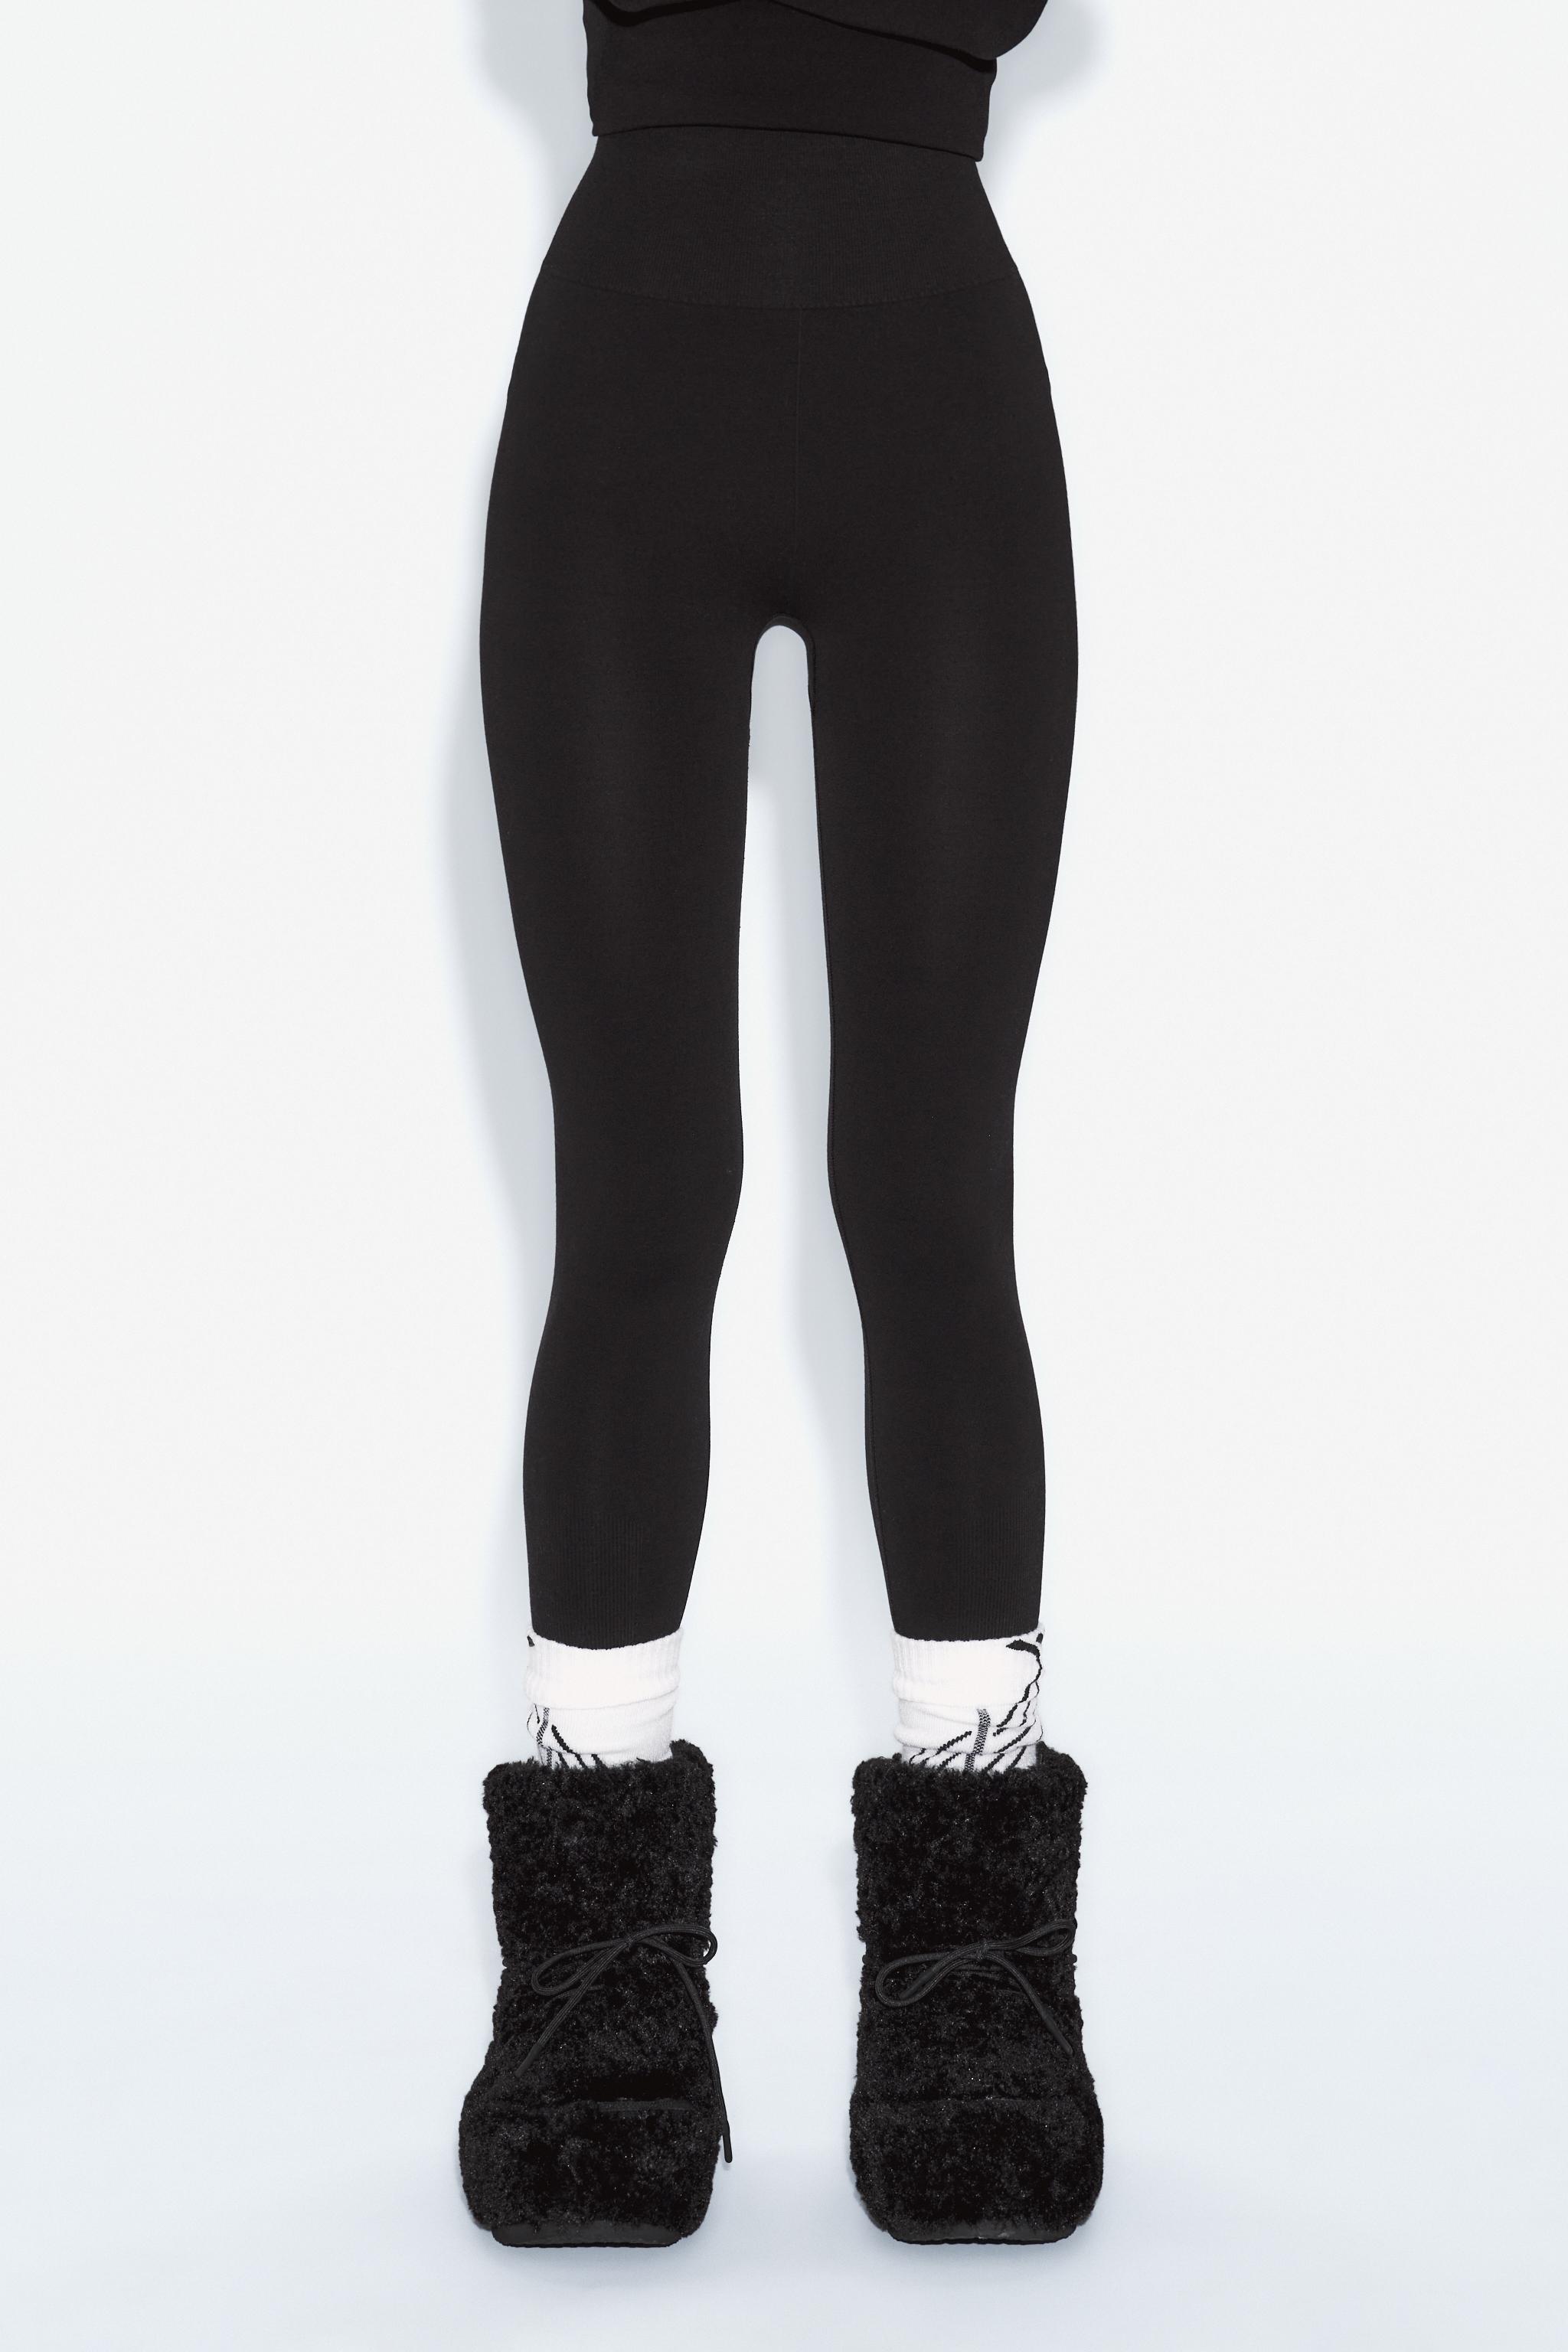 Zara slit front leggings bloggers favorite NWT Zara Sm